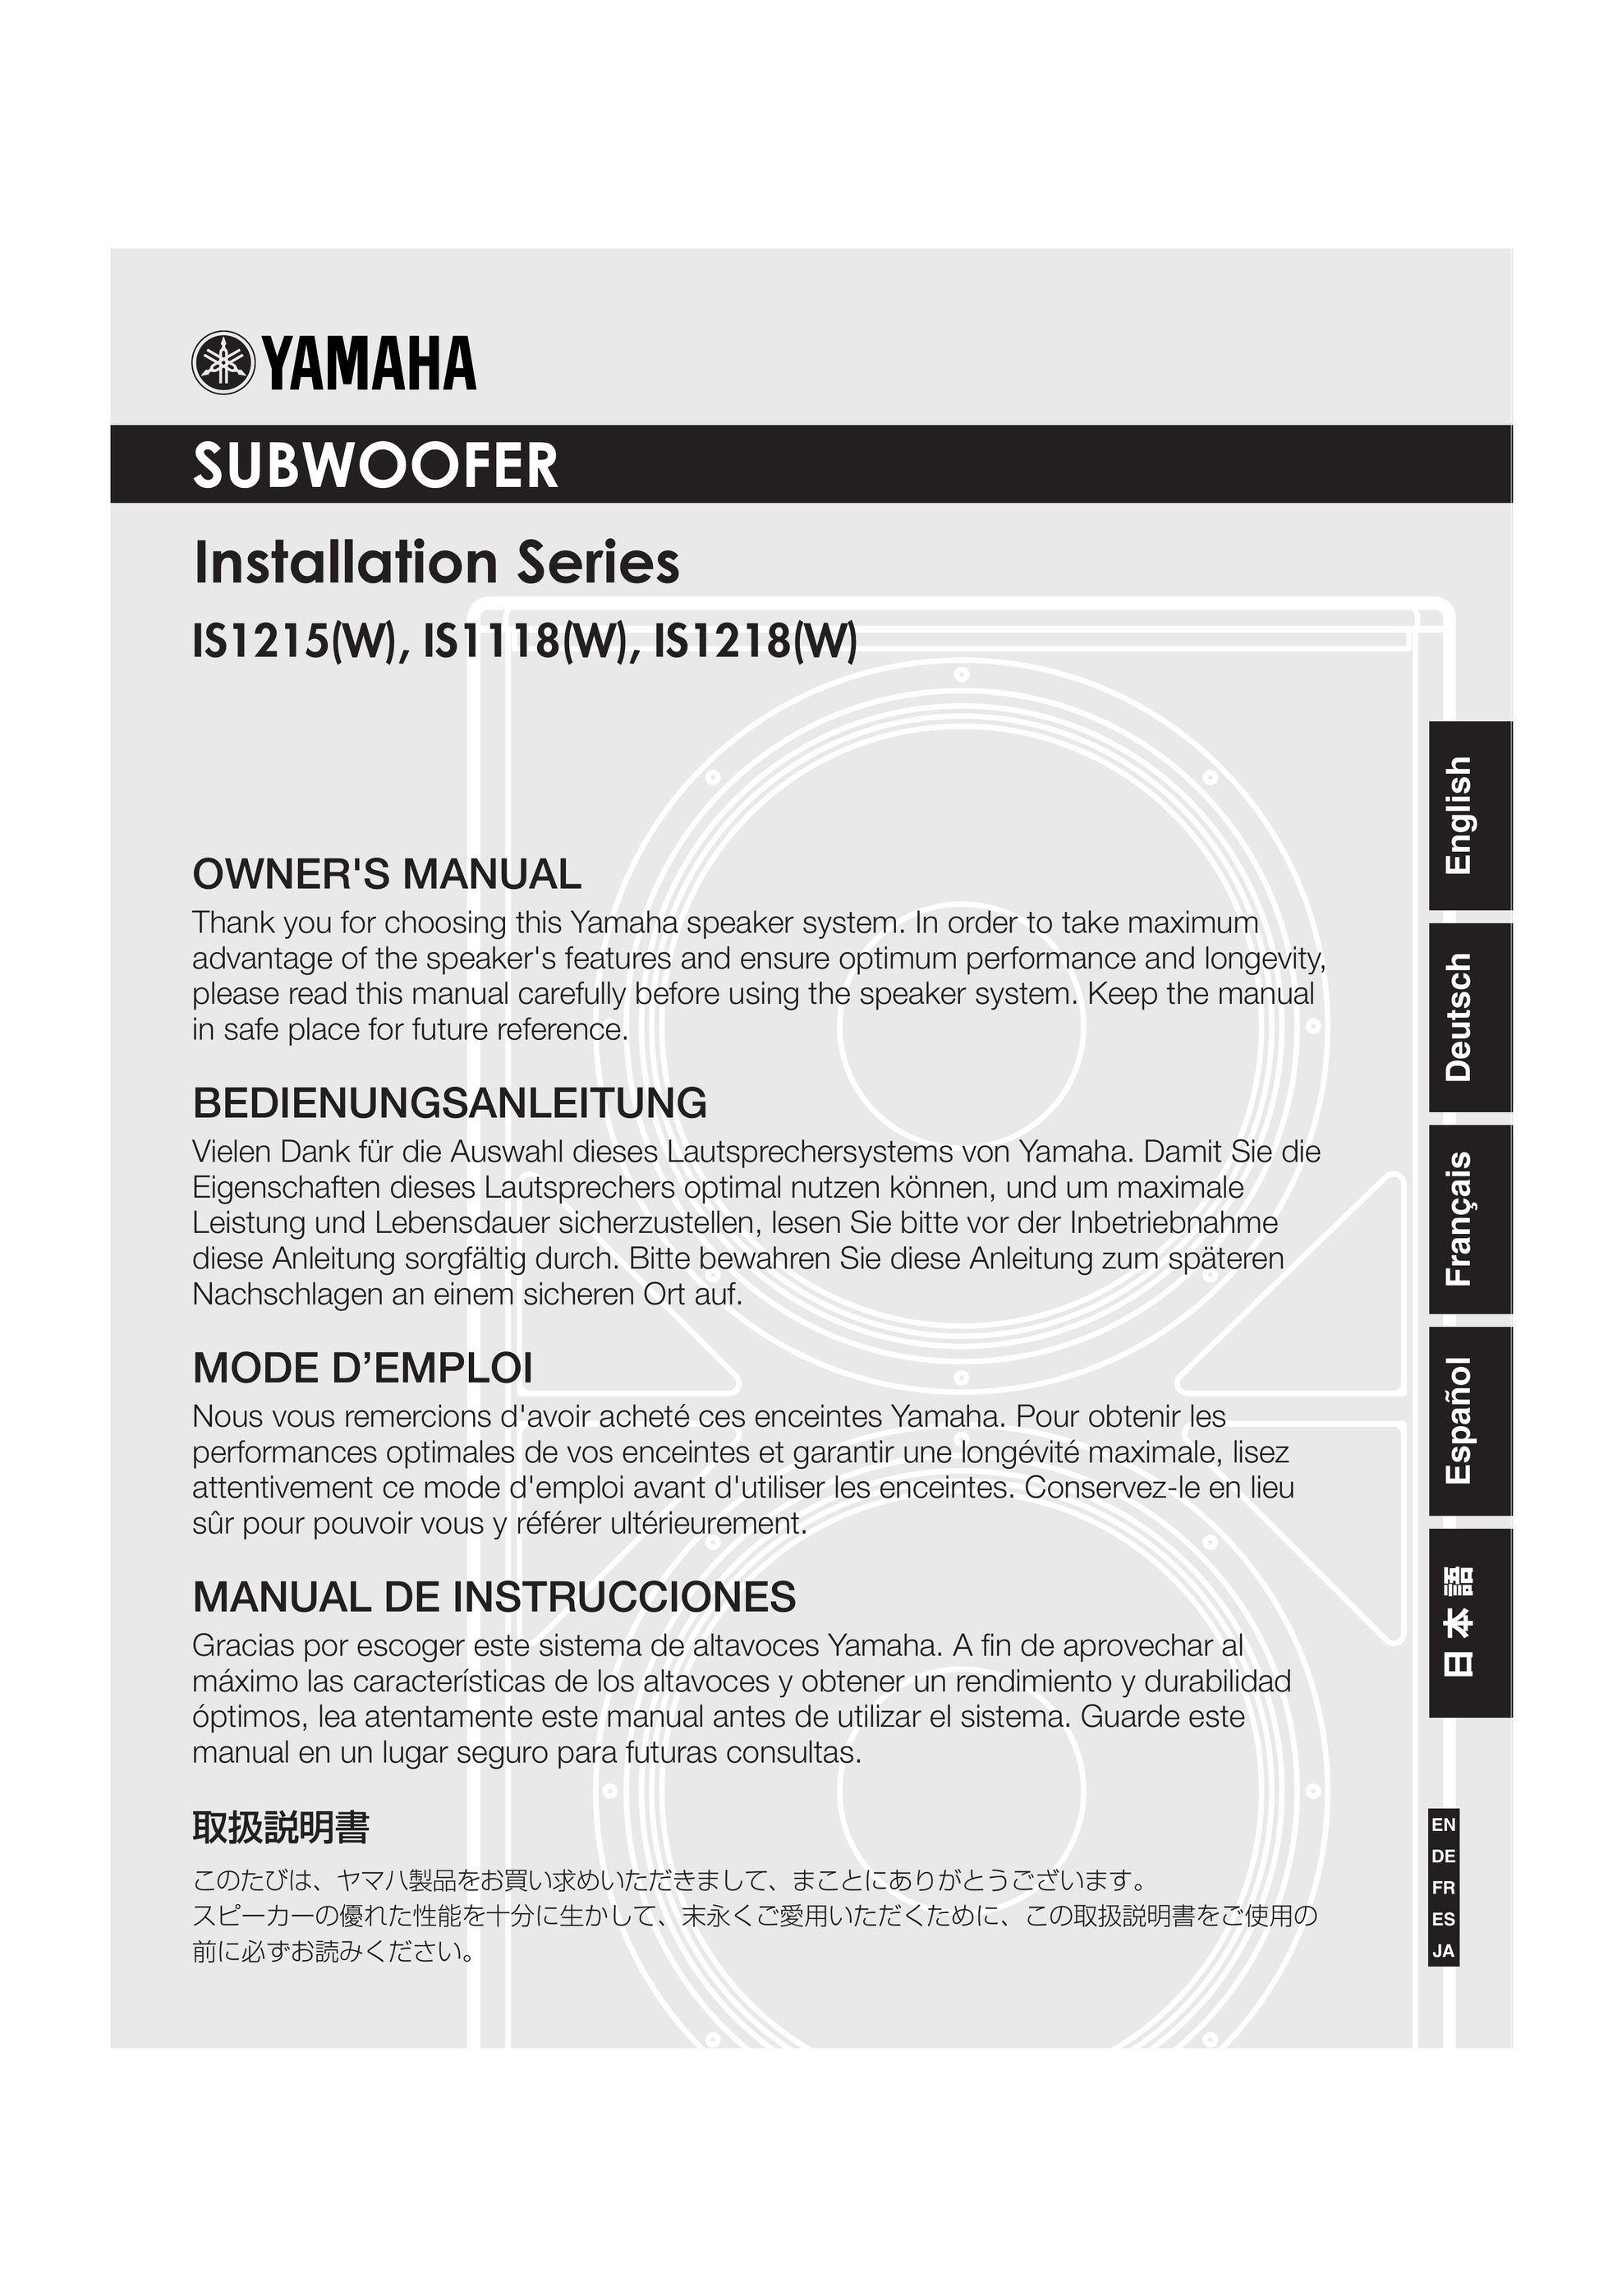 Yamaha IS1215(W) Speaker User Manual